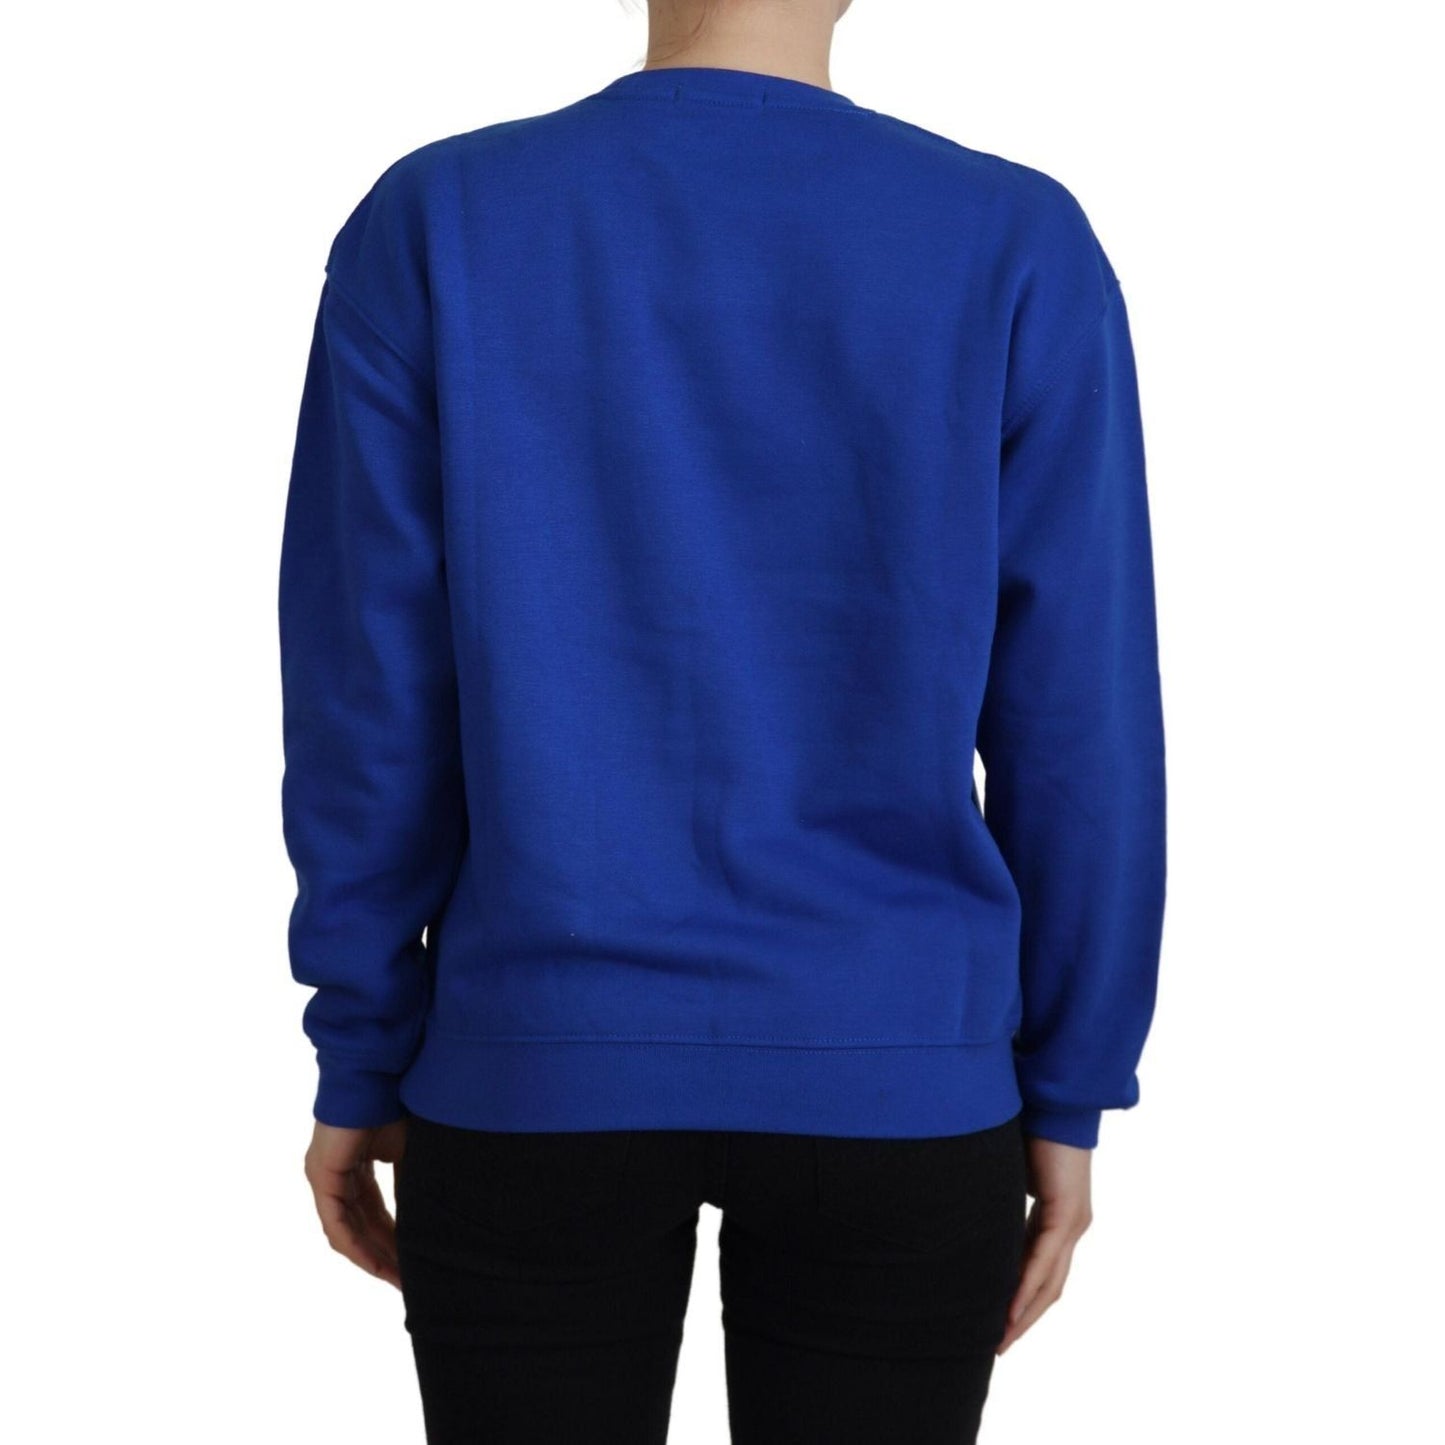 Philippe Model Chic Blue Printed Long Sleeve Pullover Sweater blue-printed-long-sleeves-pullover-sweater IMG_9331-1-scaled-81b259e5-0c4.jpg